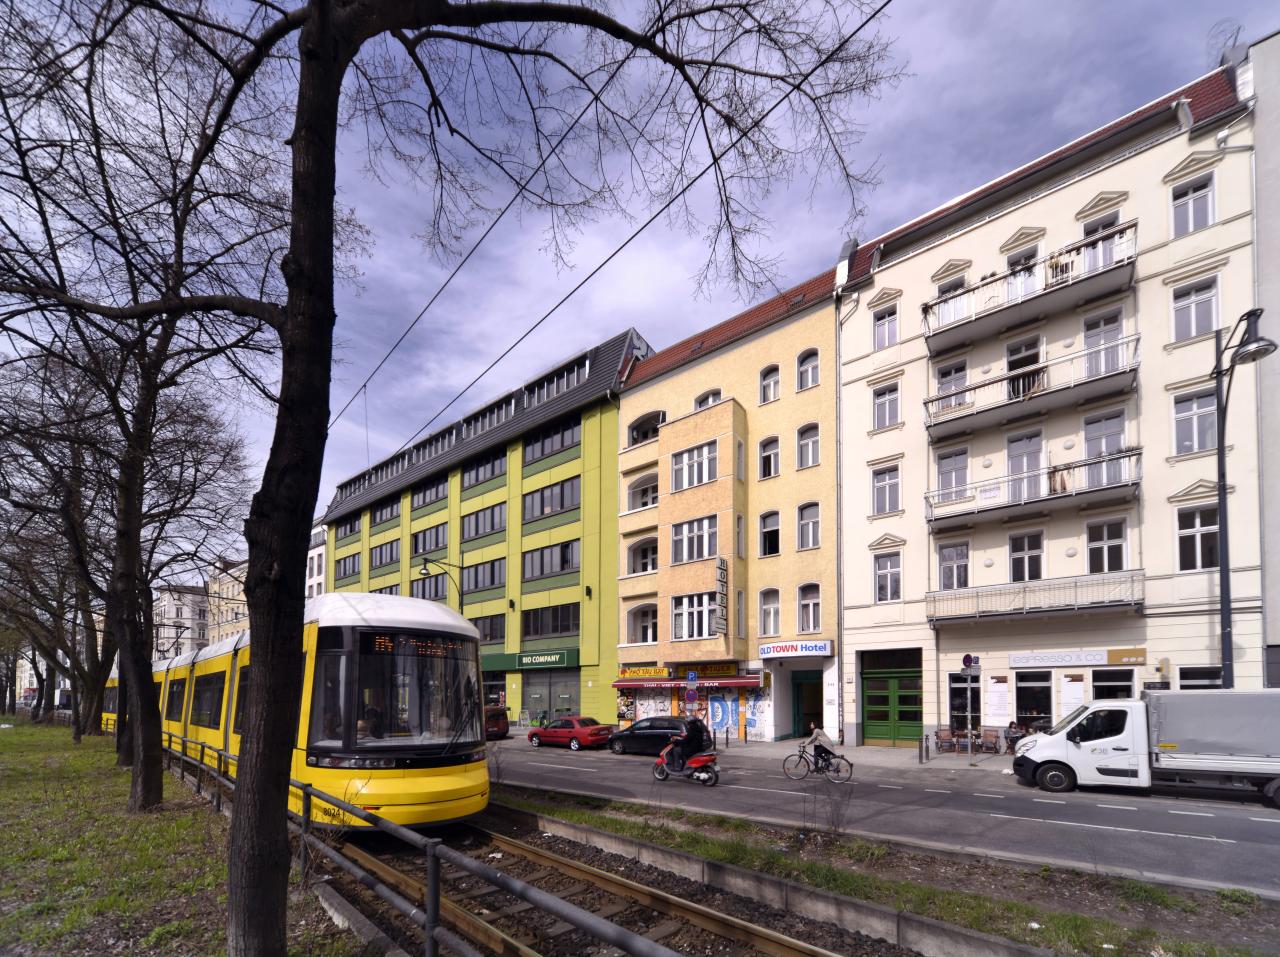 2-room-apartment on ground floor near Alexanderplatz